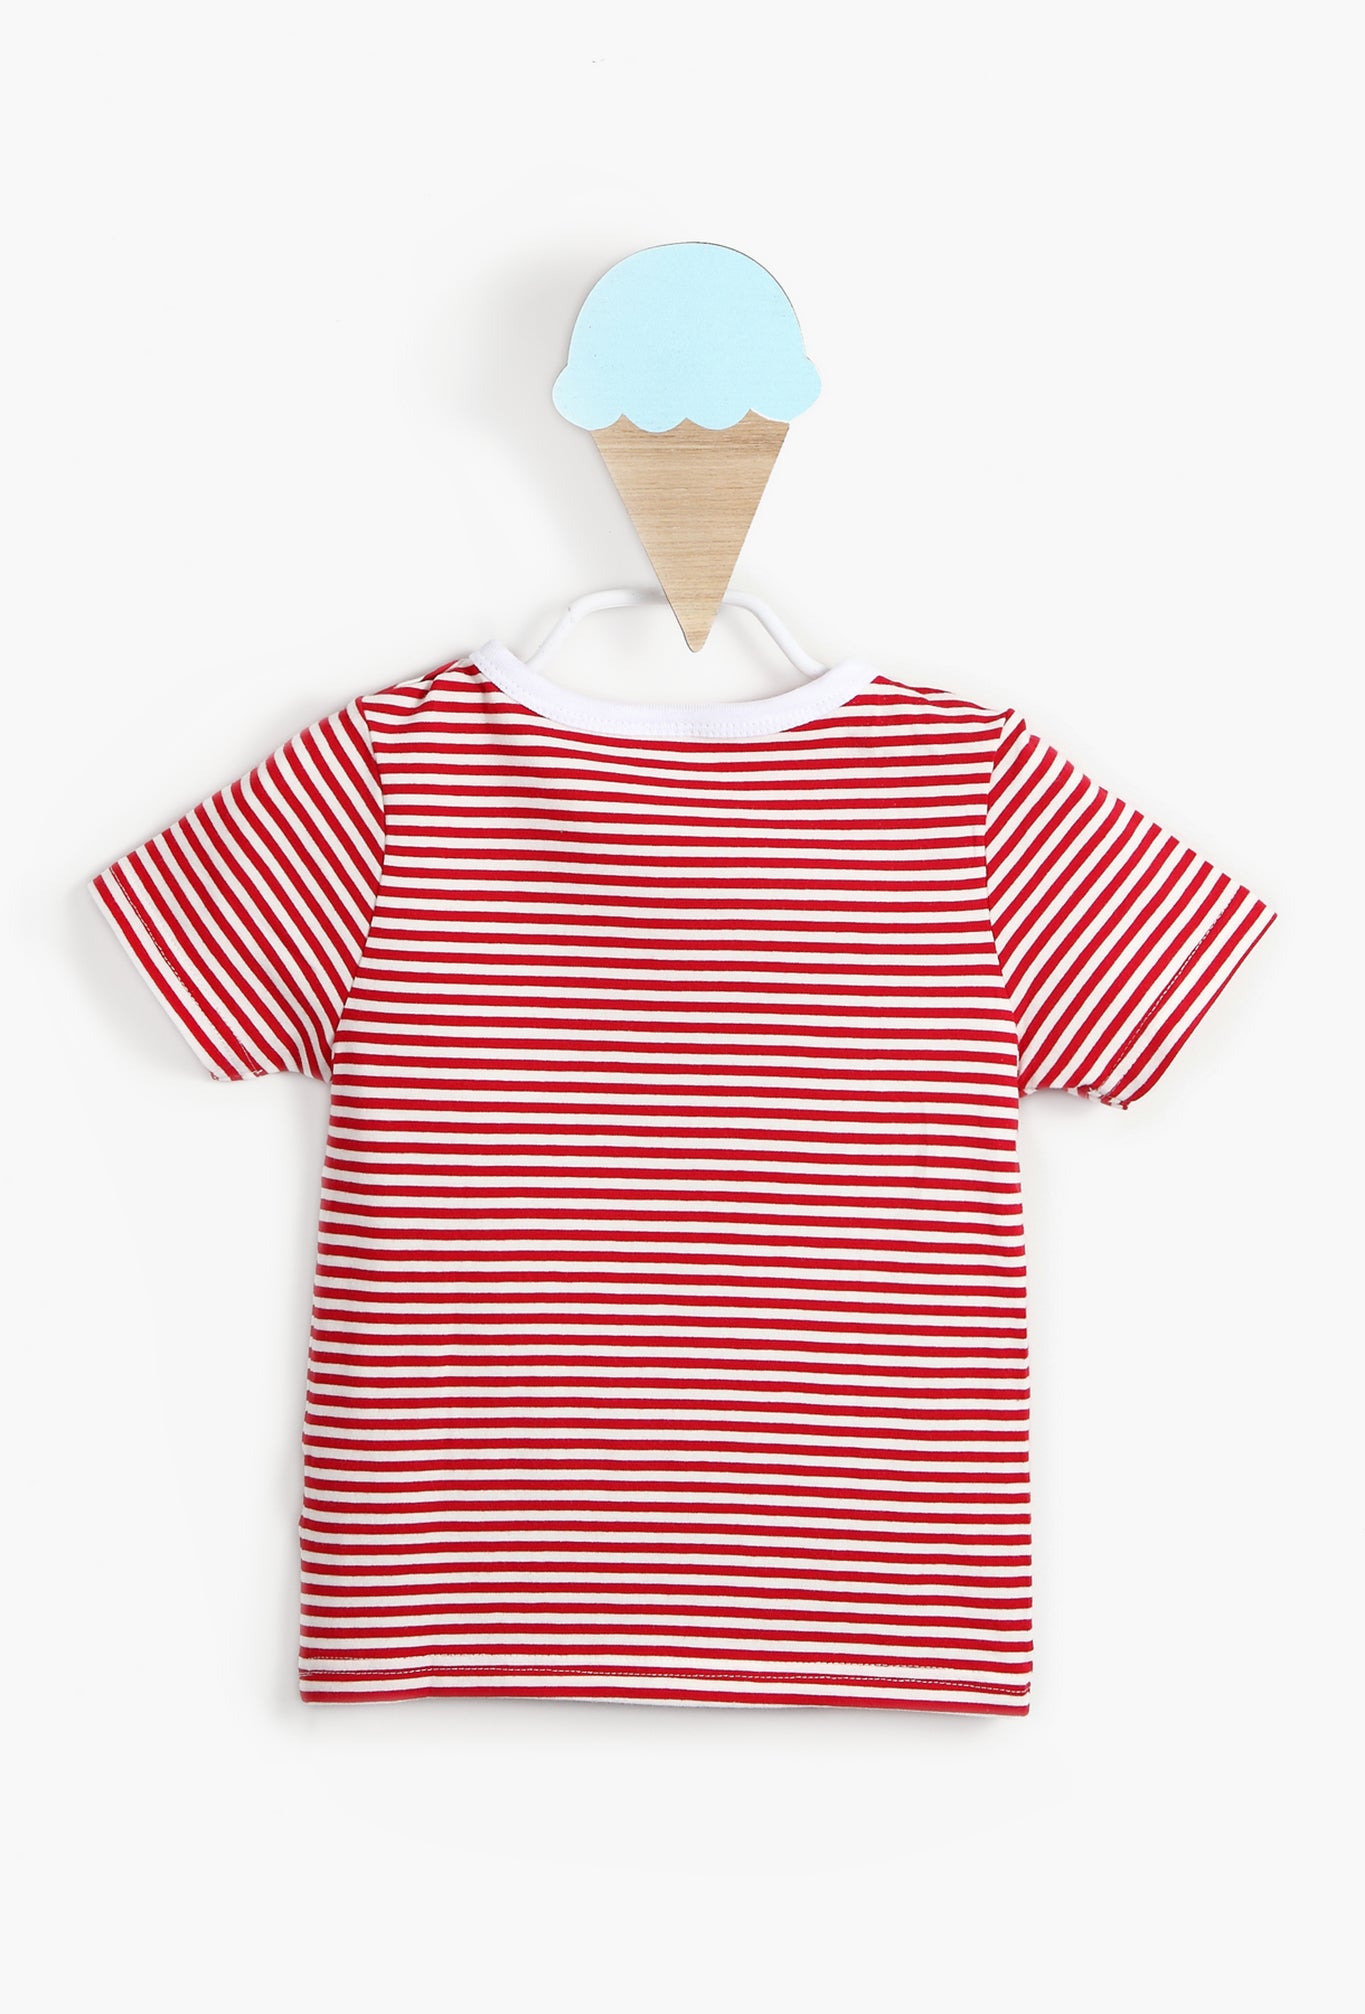  Red Striped Baby Boy Tshirt